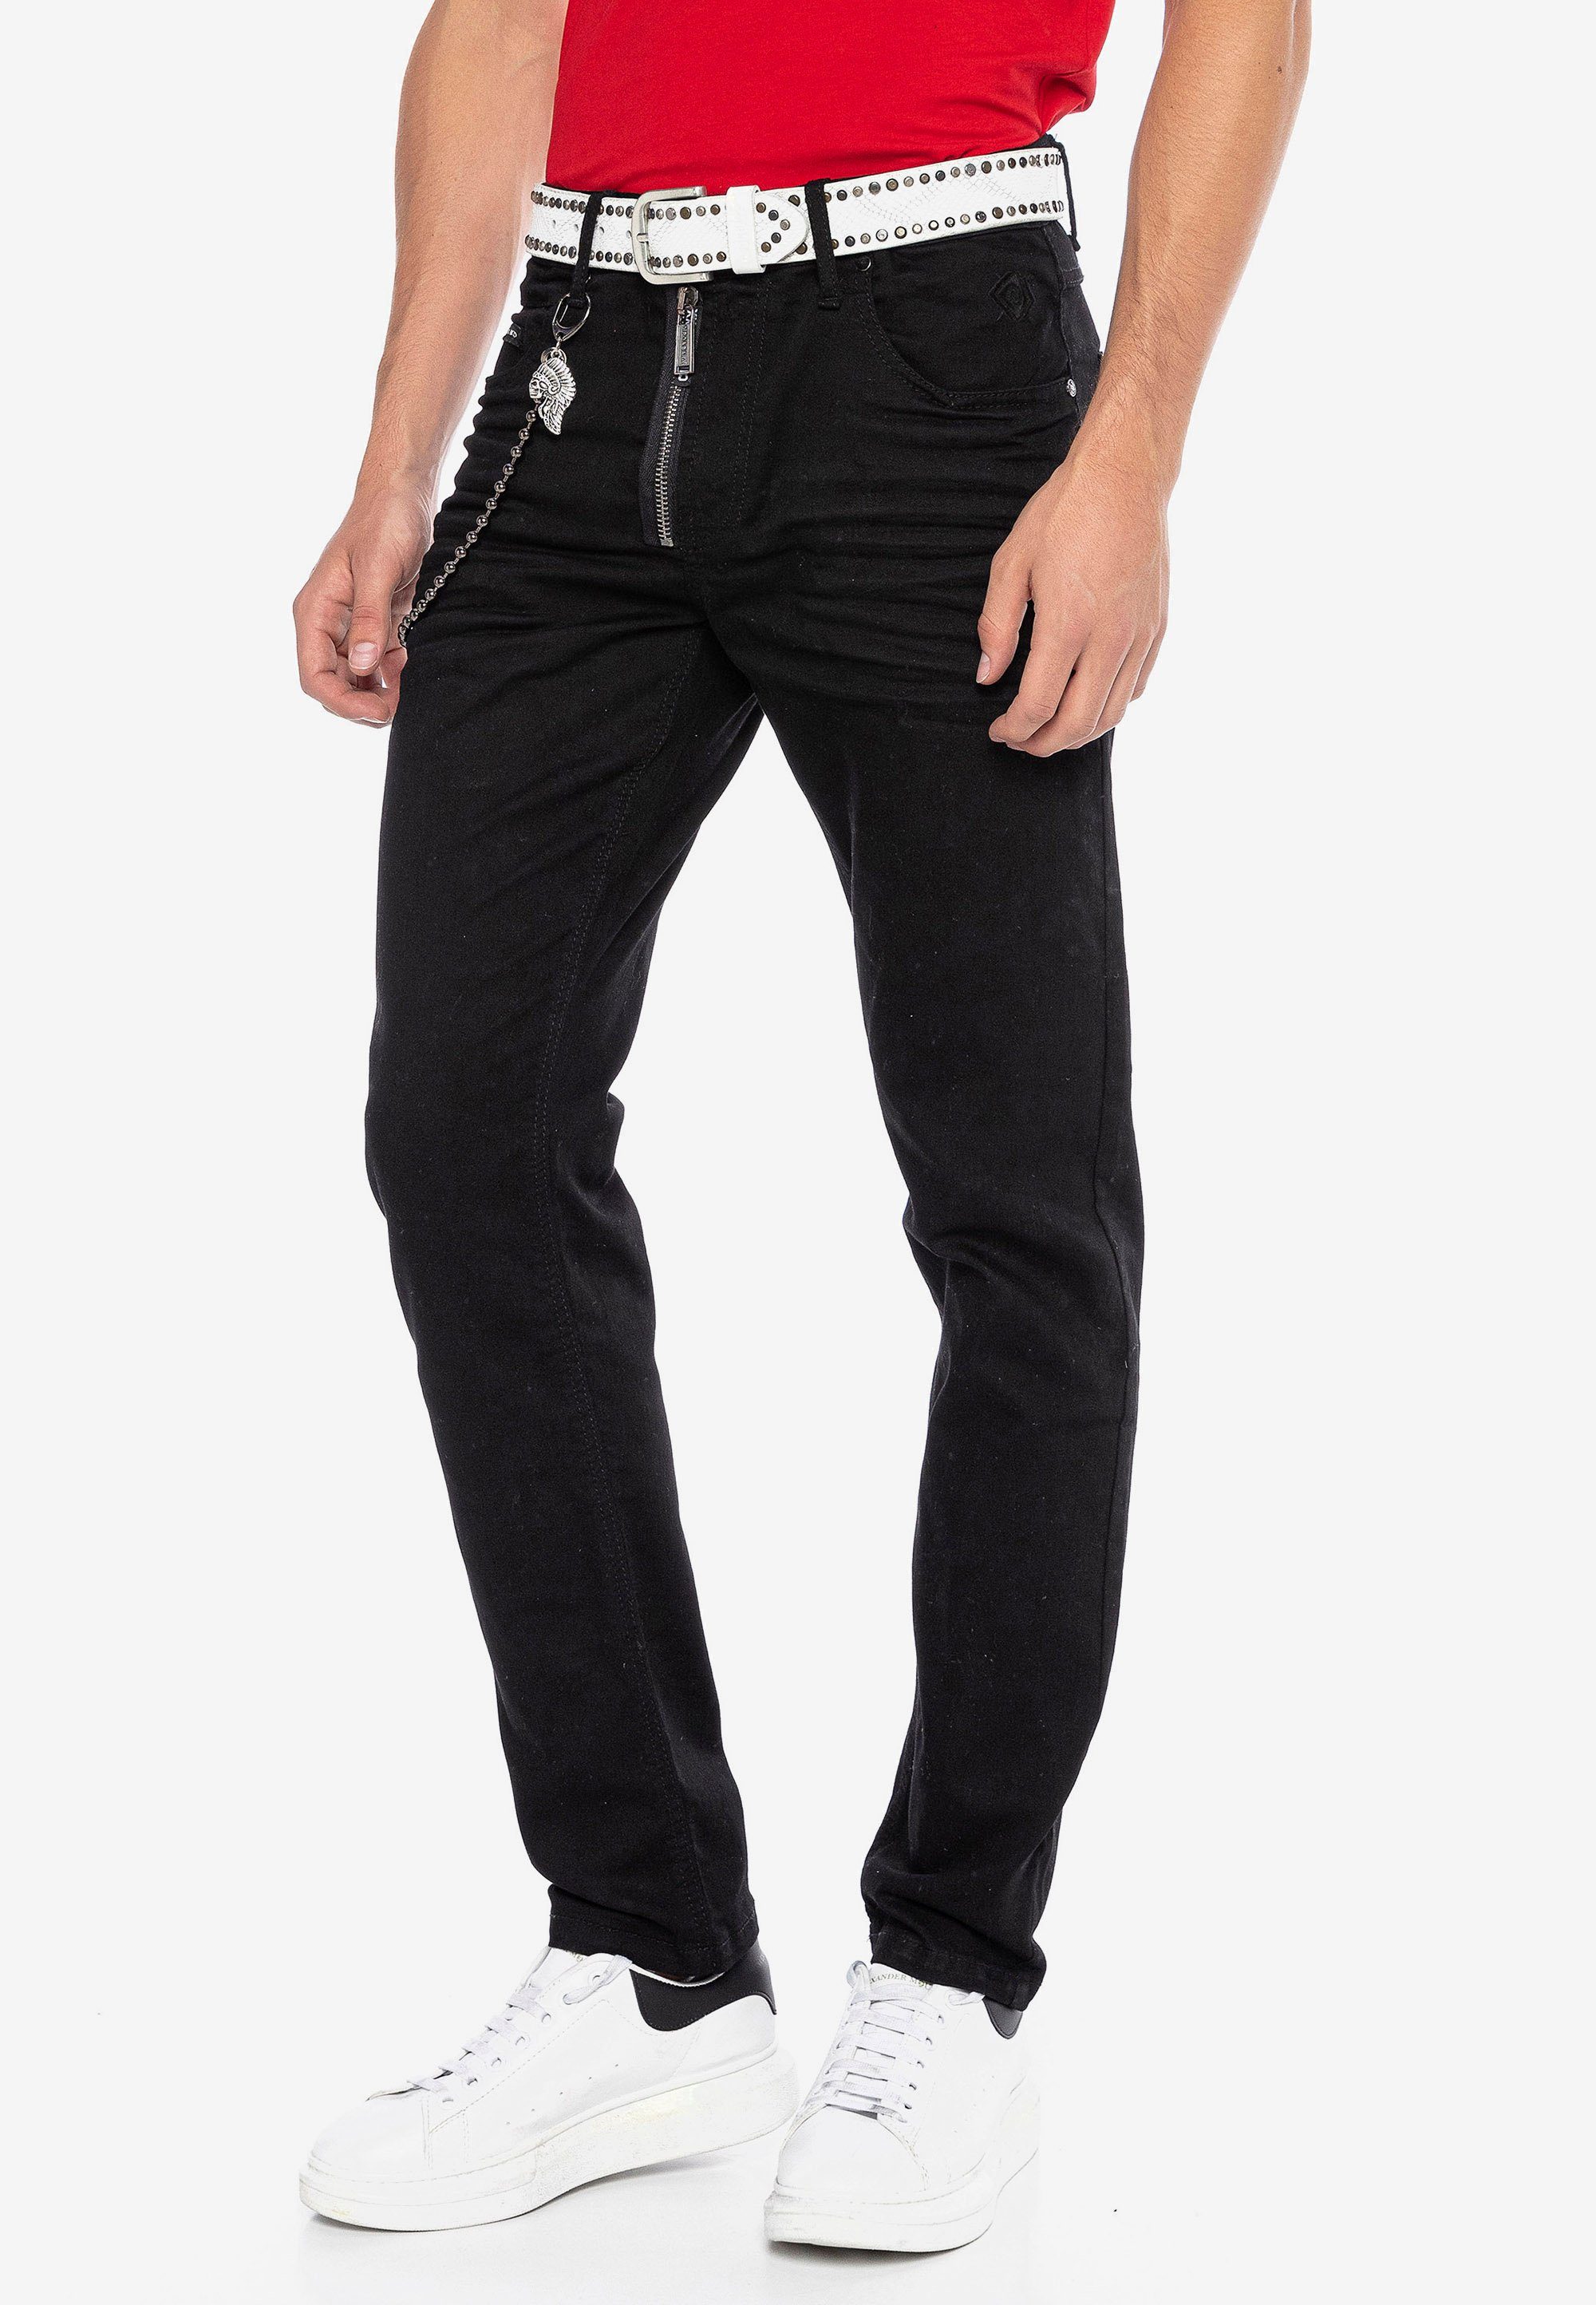 Cipo & Baxx CD675 Straight-Jeans Look stylischem in